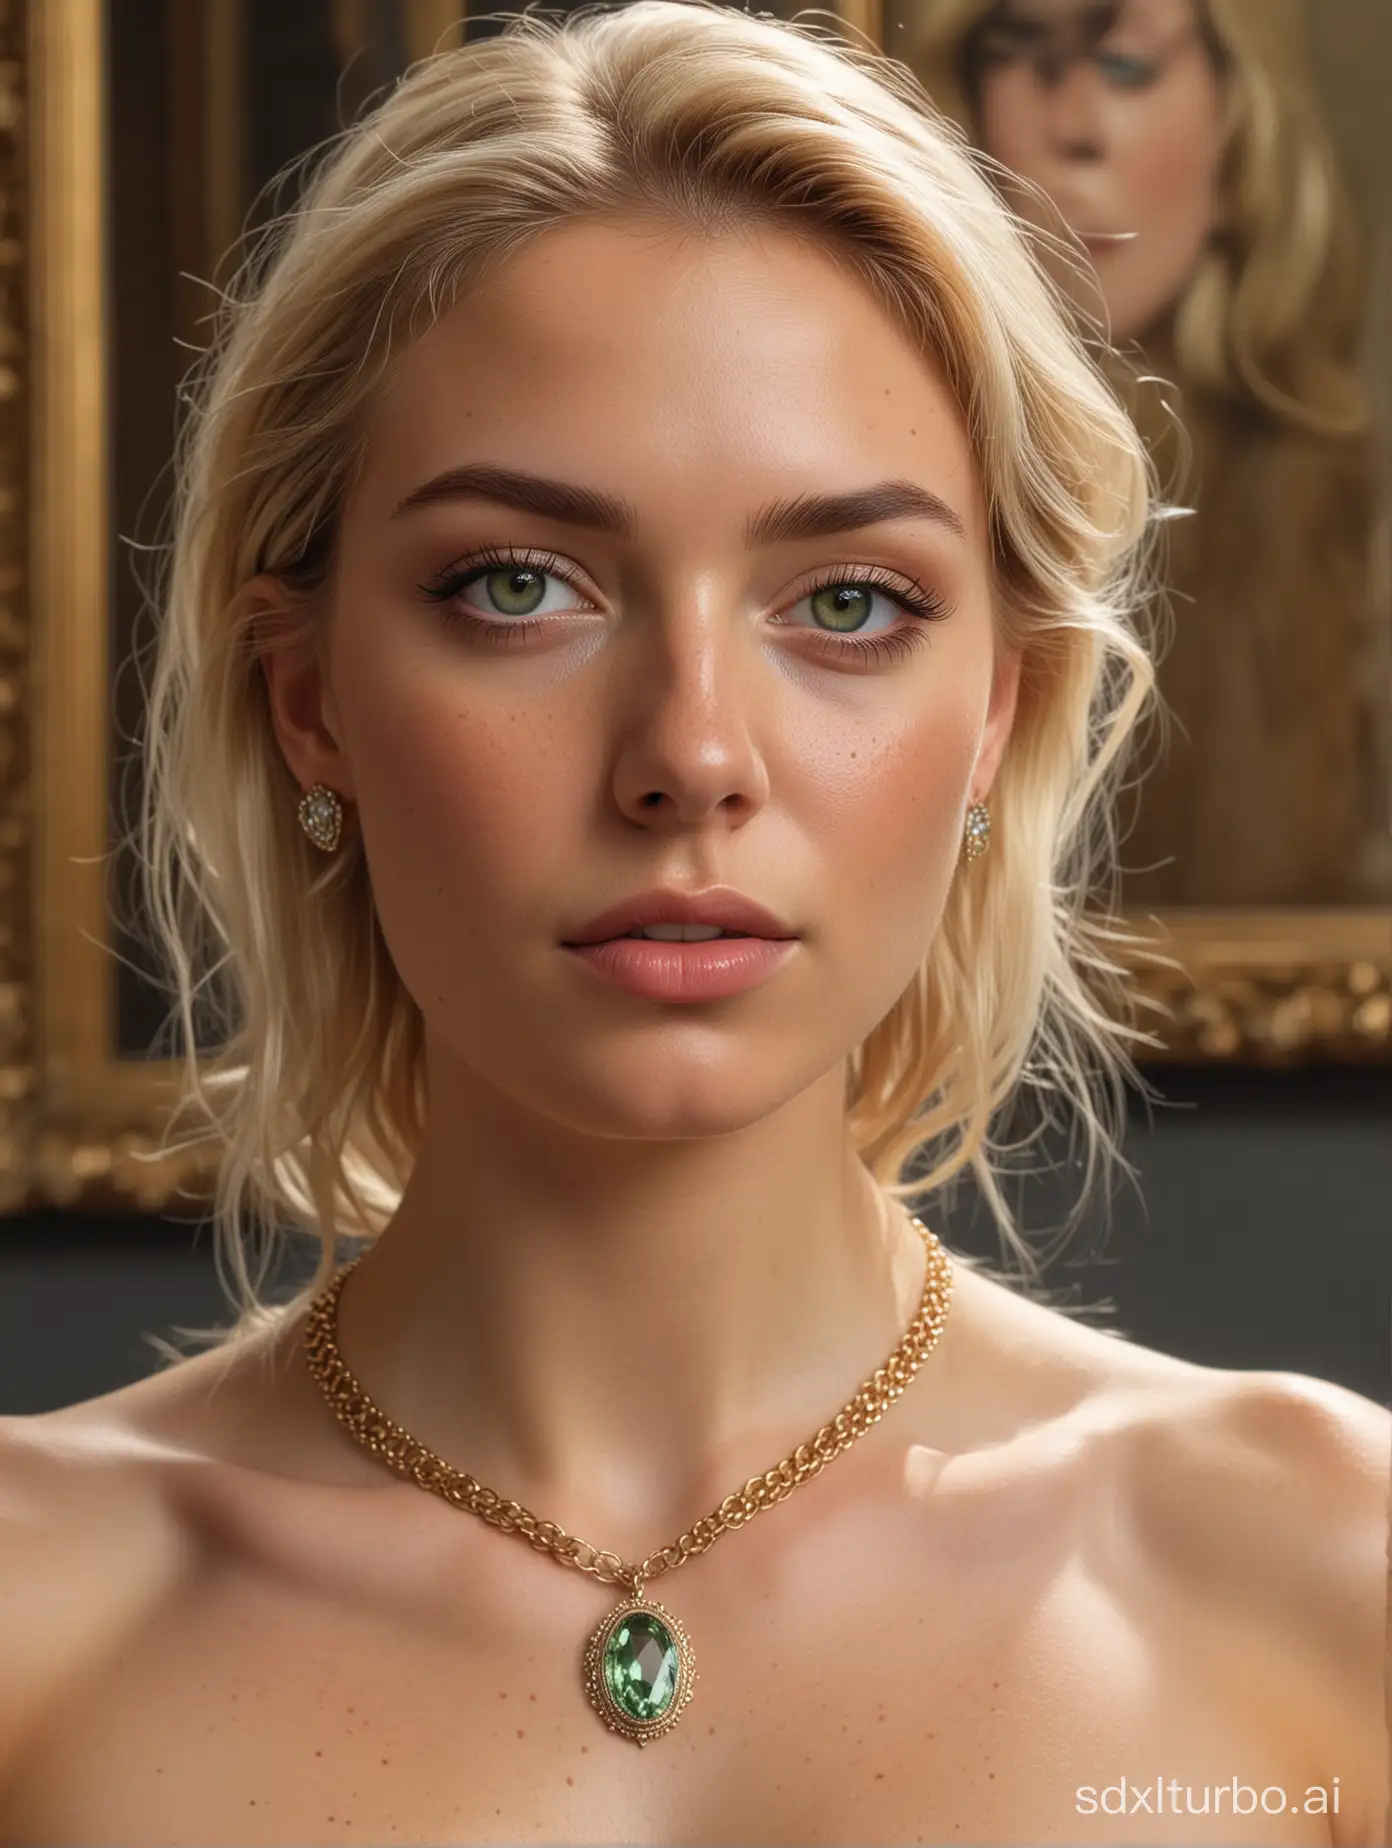 Elegant-Blonde-Woman-Portrait-in-Luxurious-Art-Gallery